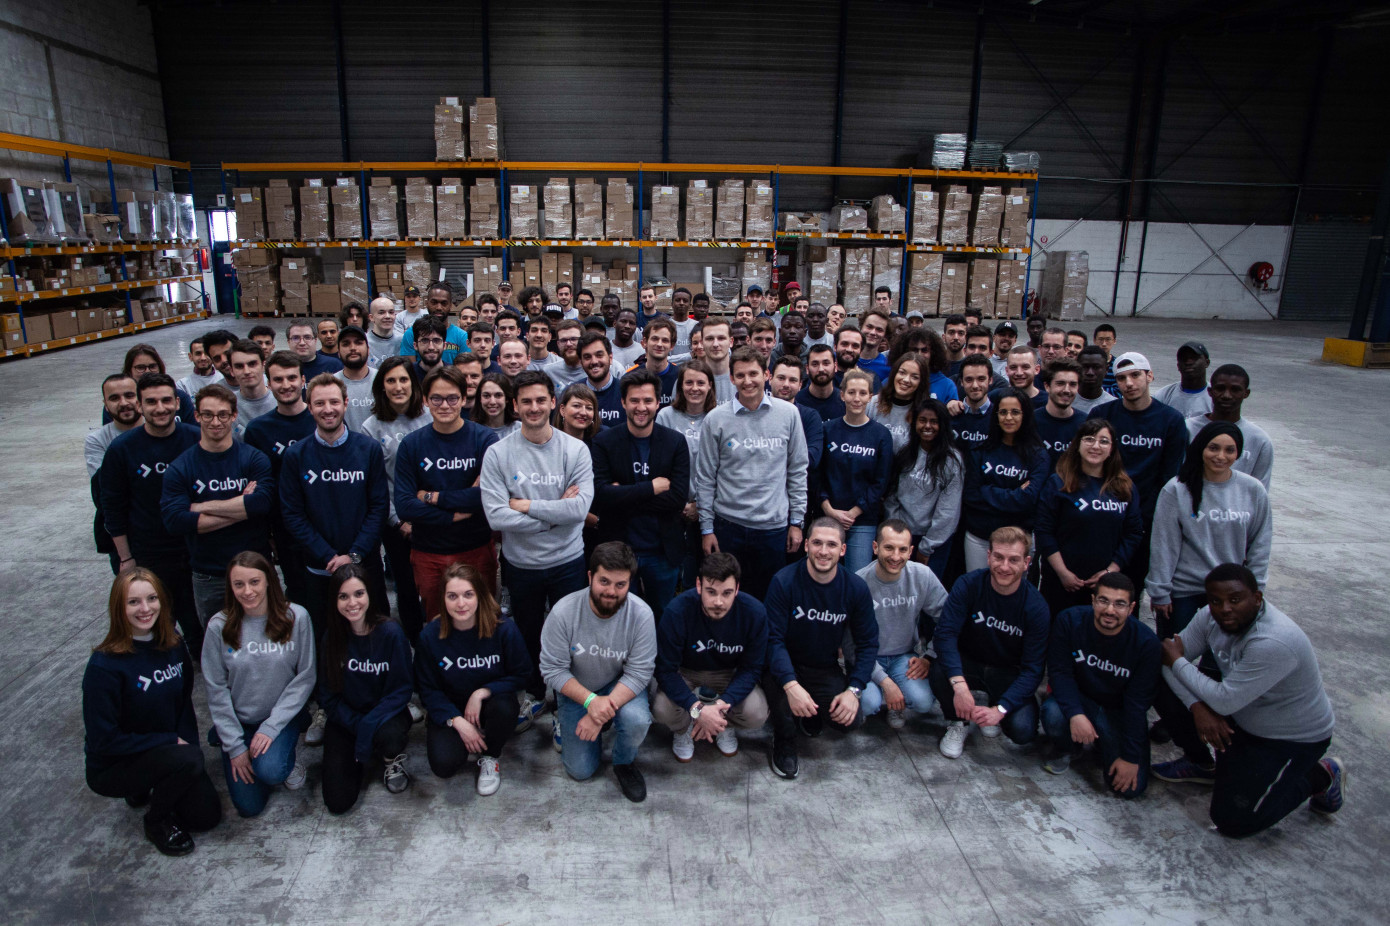 Paris-based Logistics Startup Cubyn raises €12M Series B